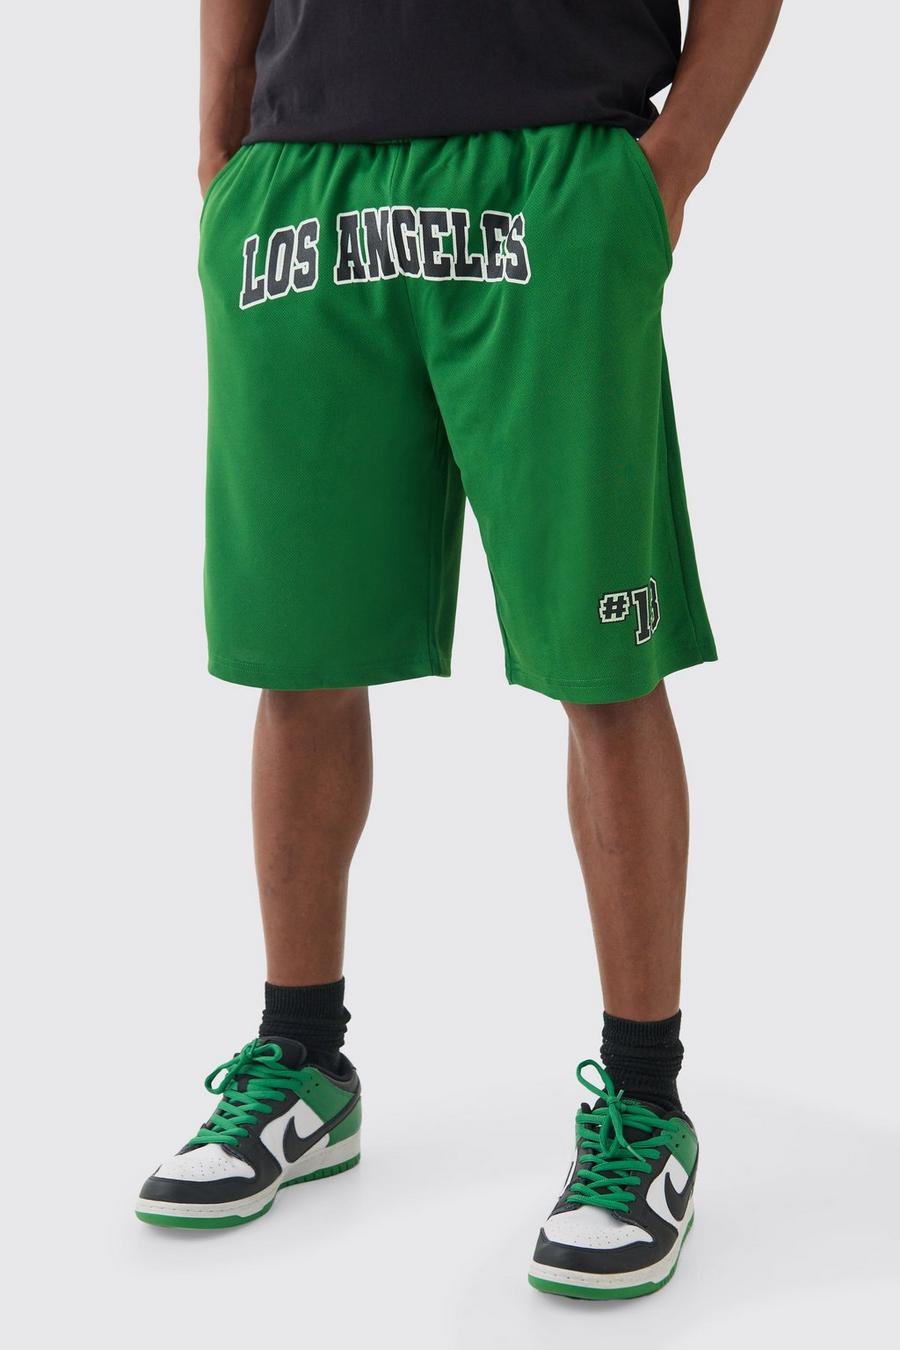 Pantaloncini lunghi da basket Los Angeles, Green